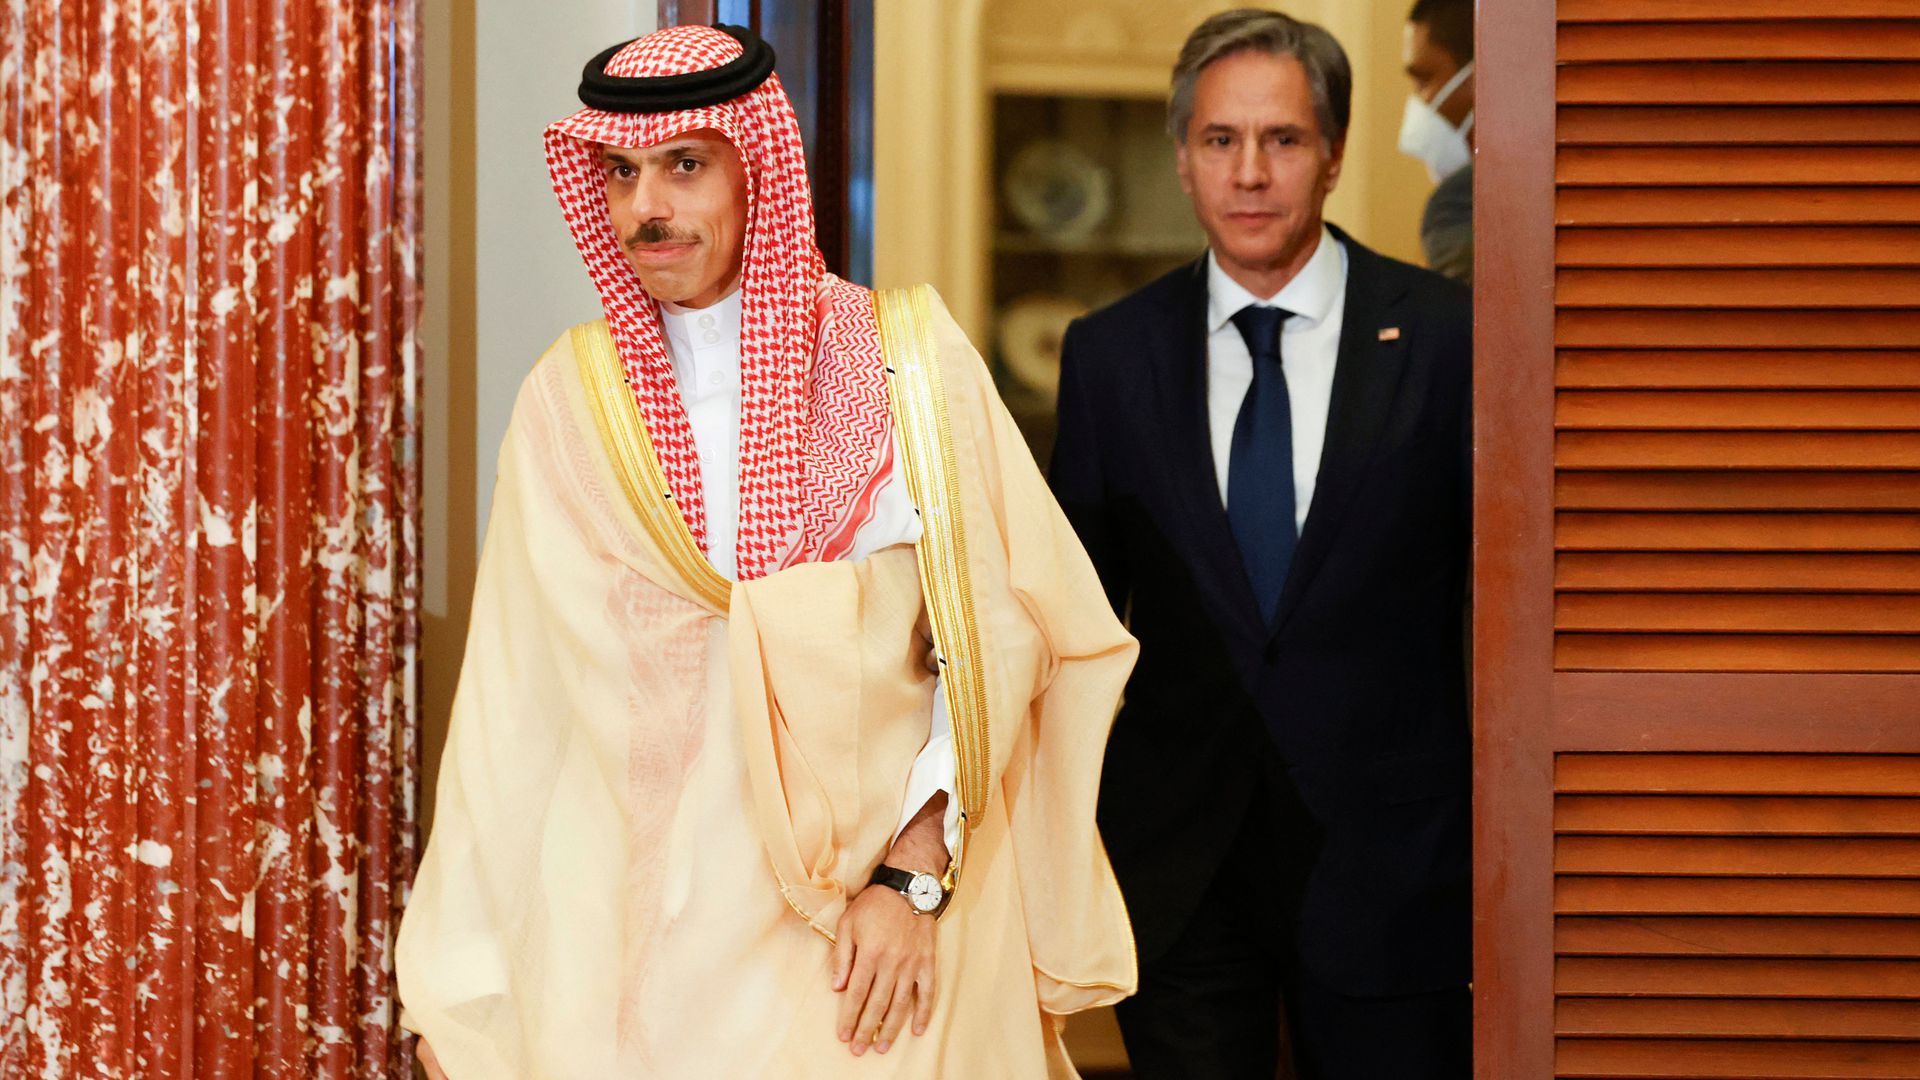 Blinken meets with Saudi Foreign Minister Faisal bin Farhan in Washington, D.C., on Oct. 14, 2021. Photo: Jonathan Ernst/AFP via Getty